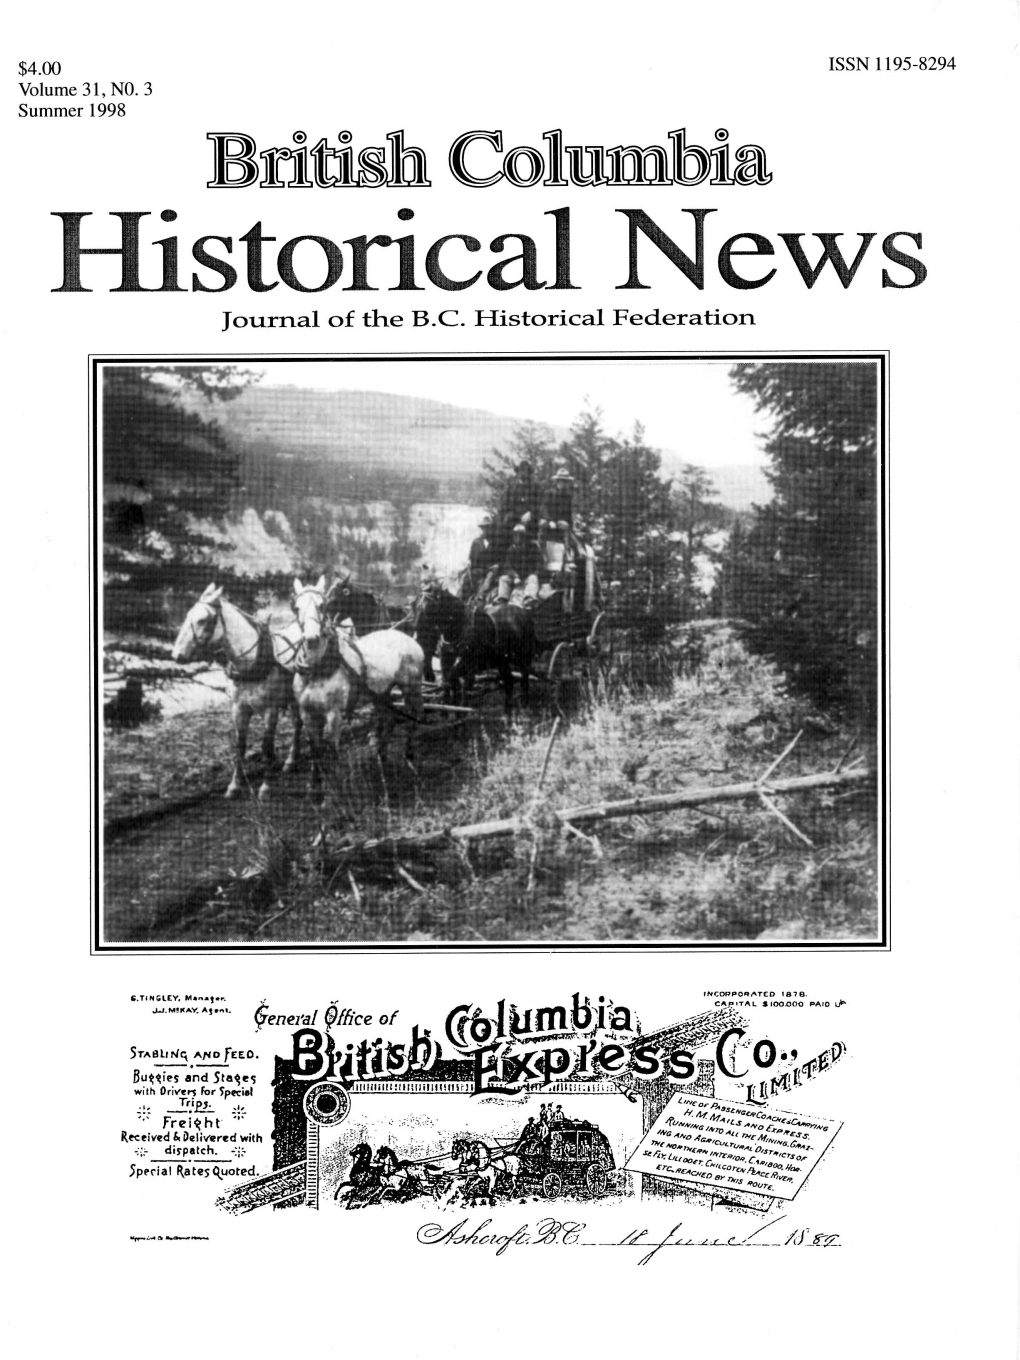 Price Ellison: a Gilded Man in British Columbias Gilded